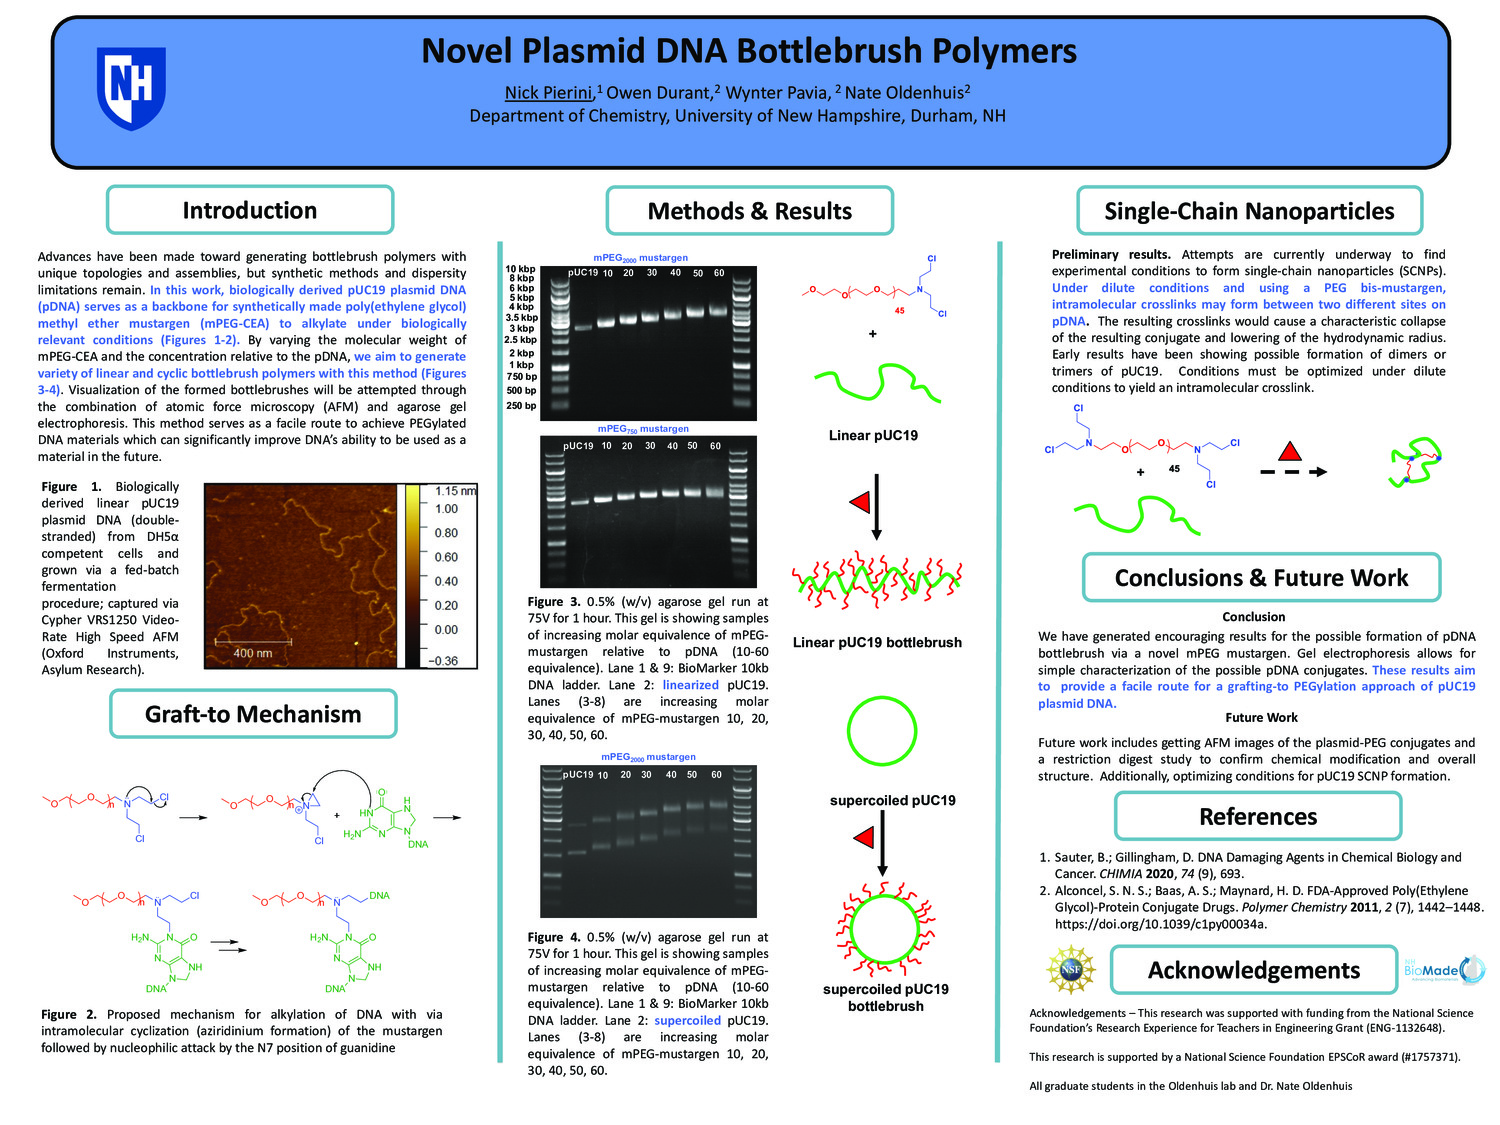 Novel Plasmid Dna Bottlebrush Polymers by np1099